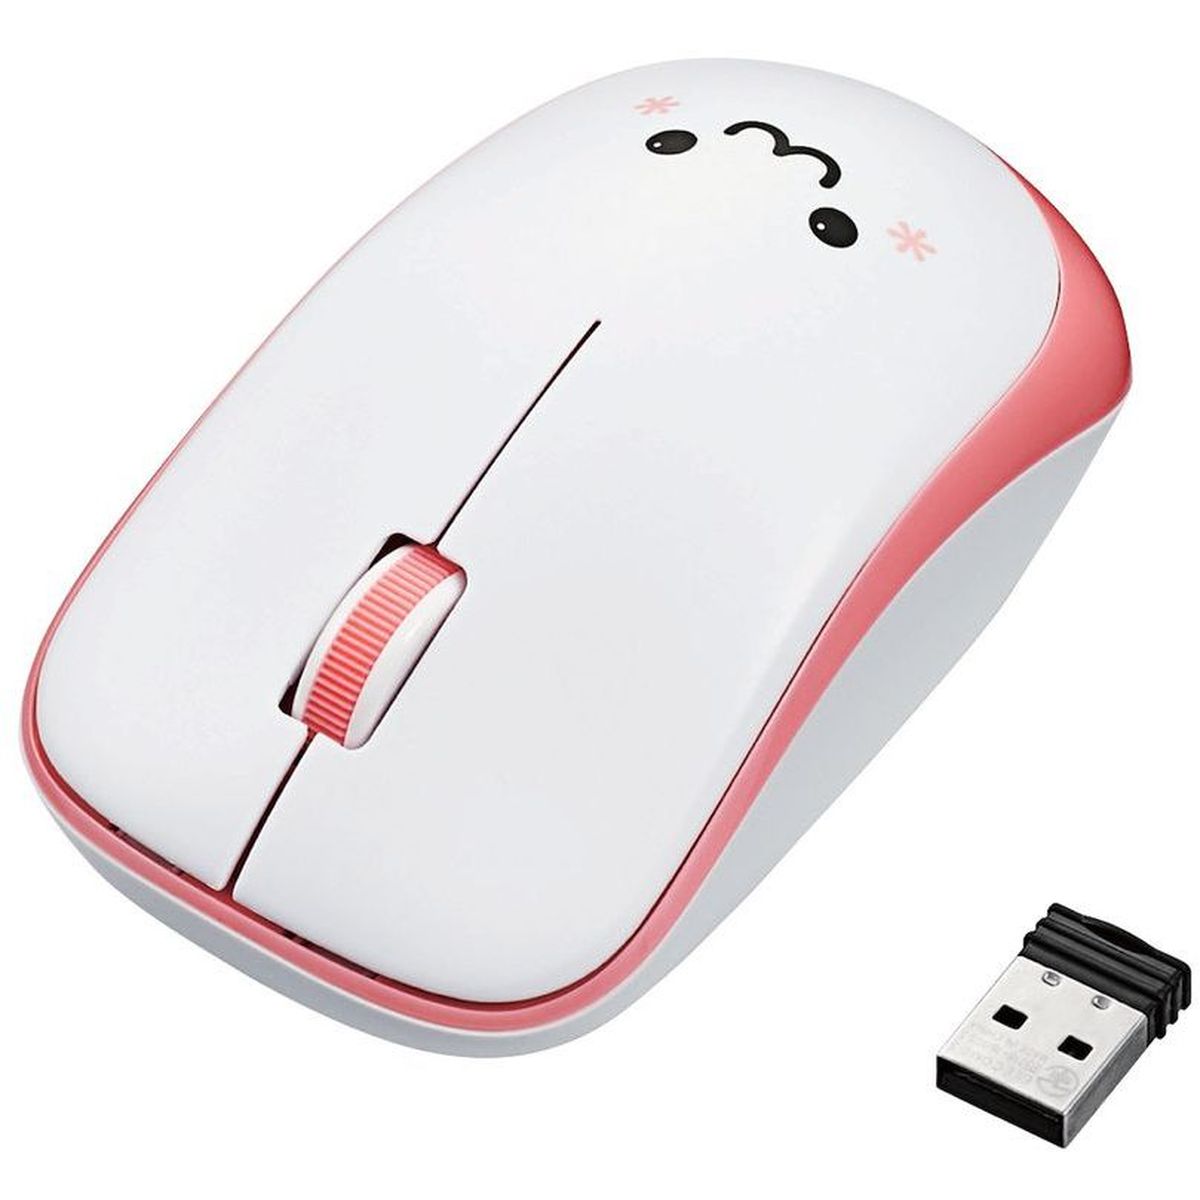 IRマウス/ENELO/無線/3ボタン/省電力/ピンク